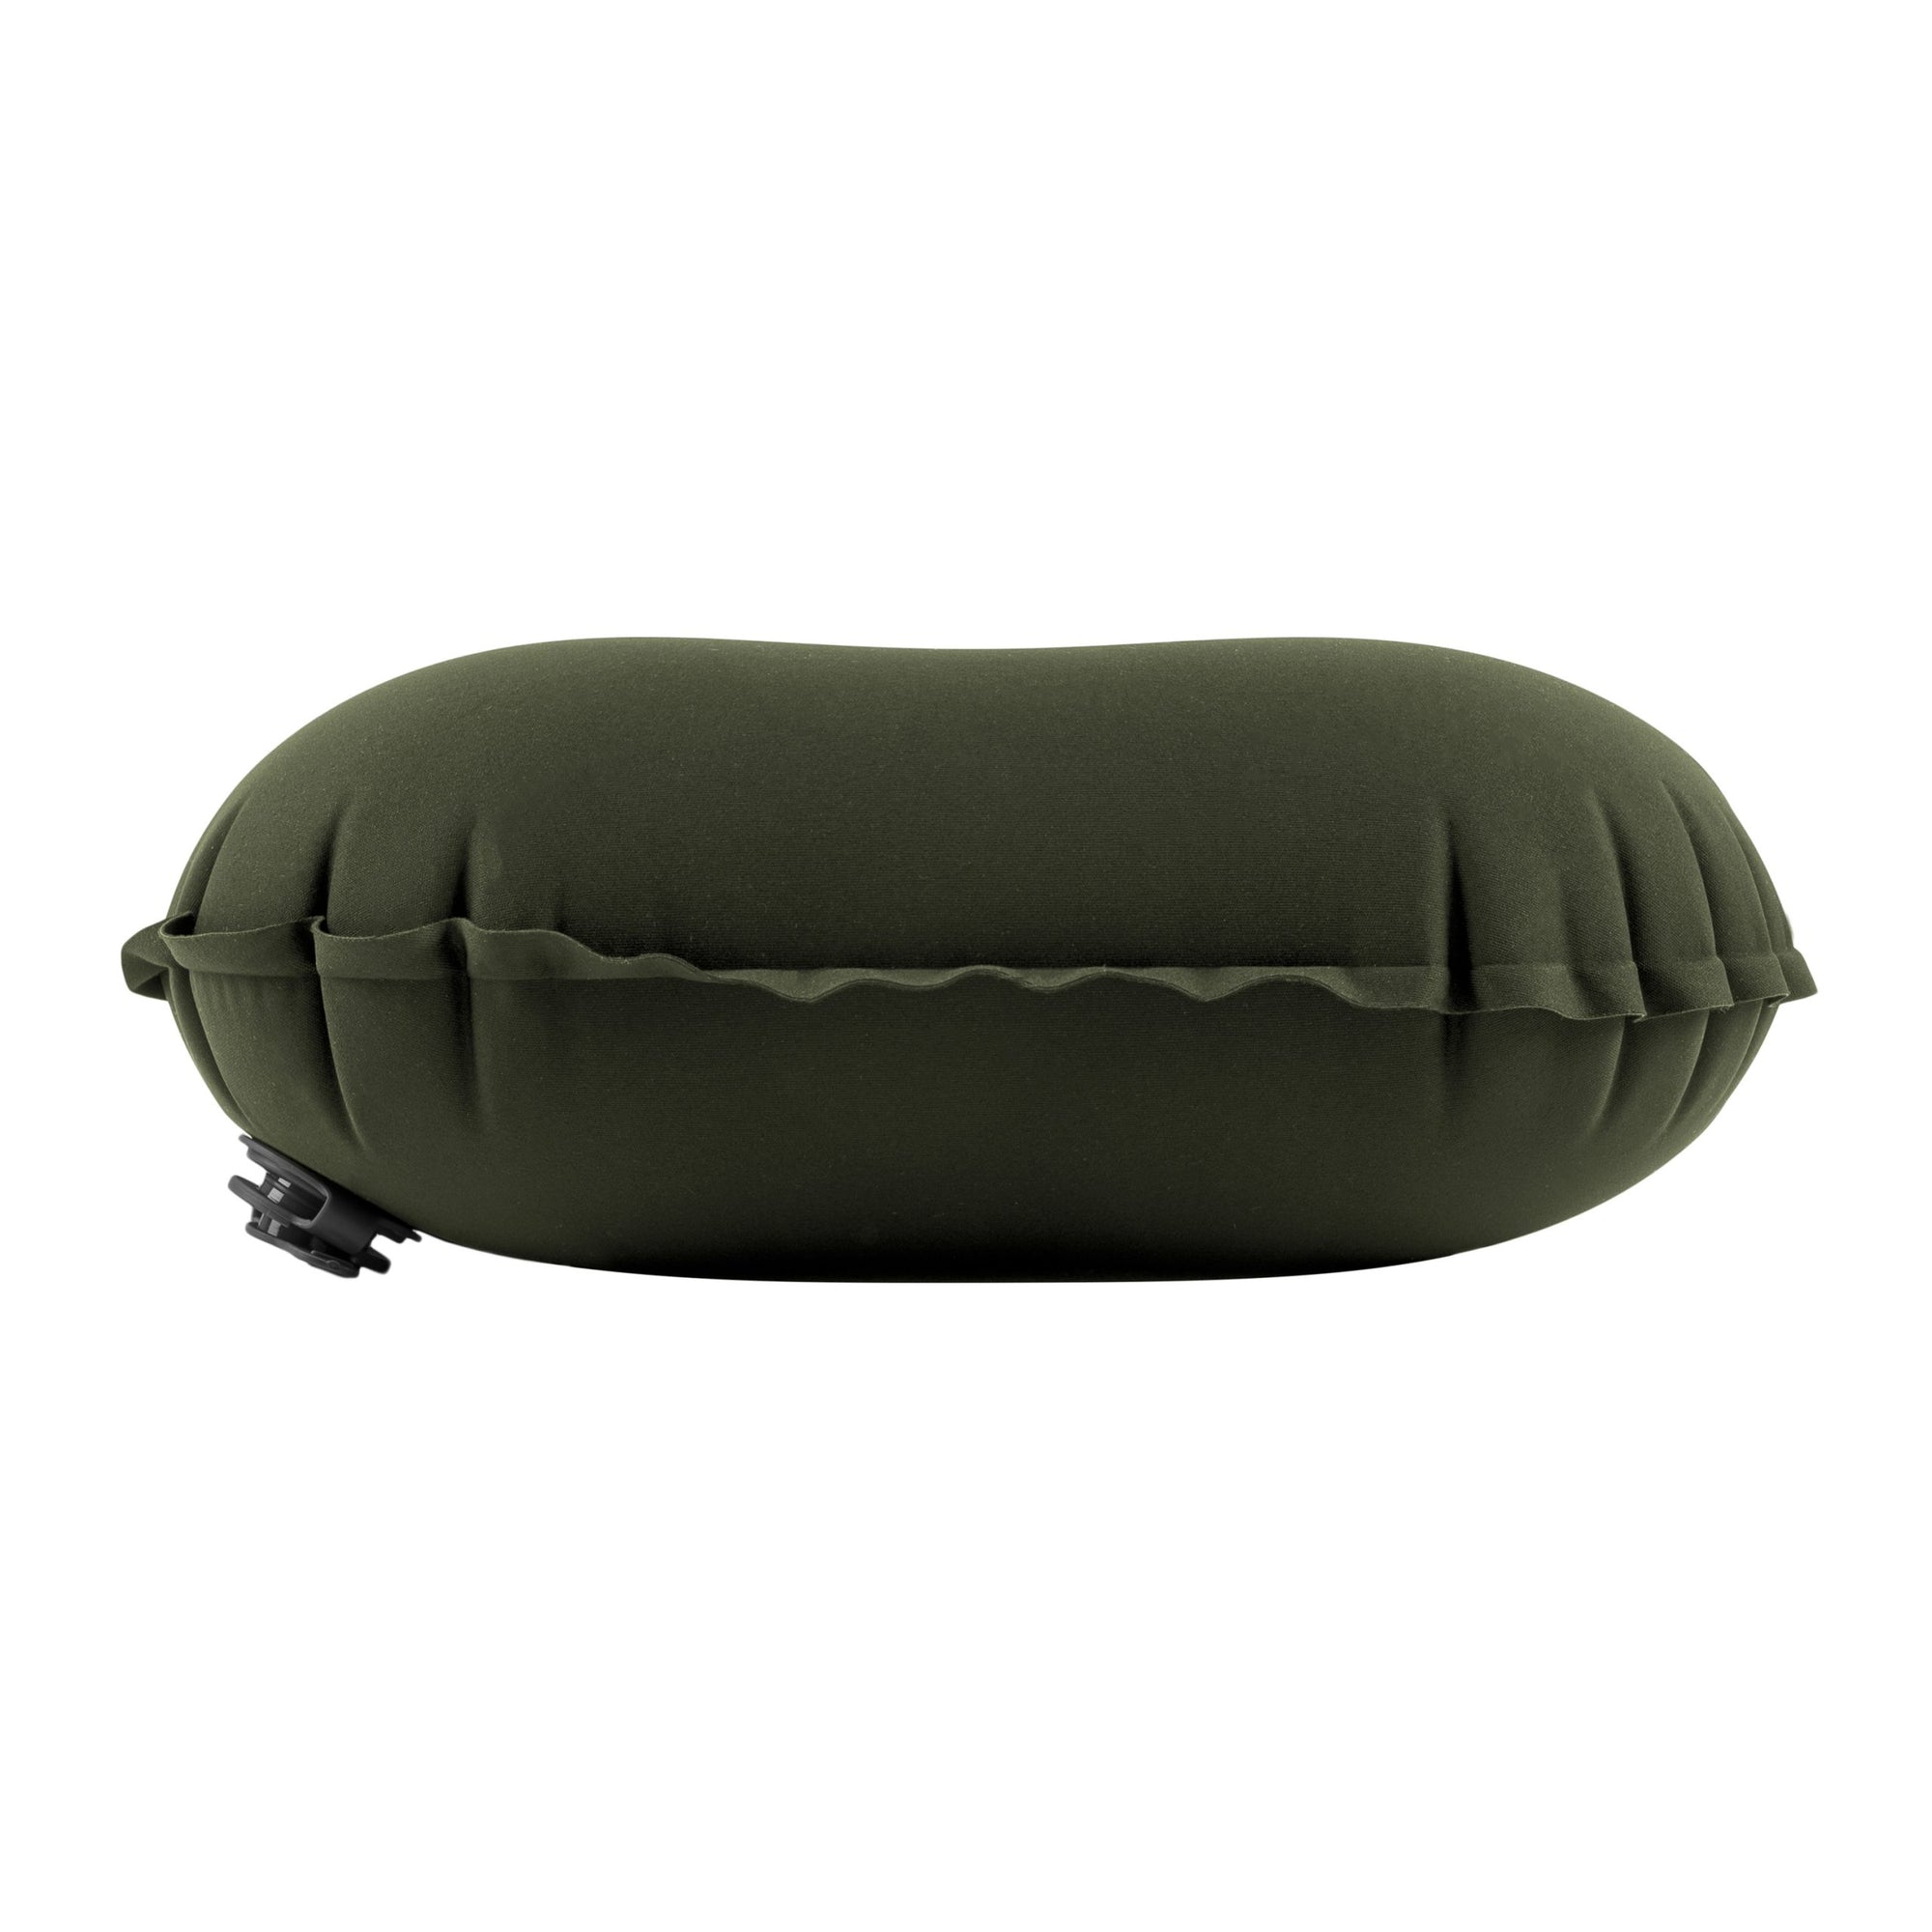 Highlander Luftkissen NAP-PAK Camping Air Pillow Olive Green